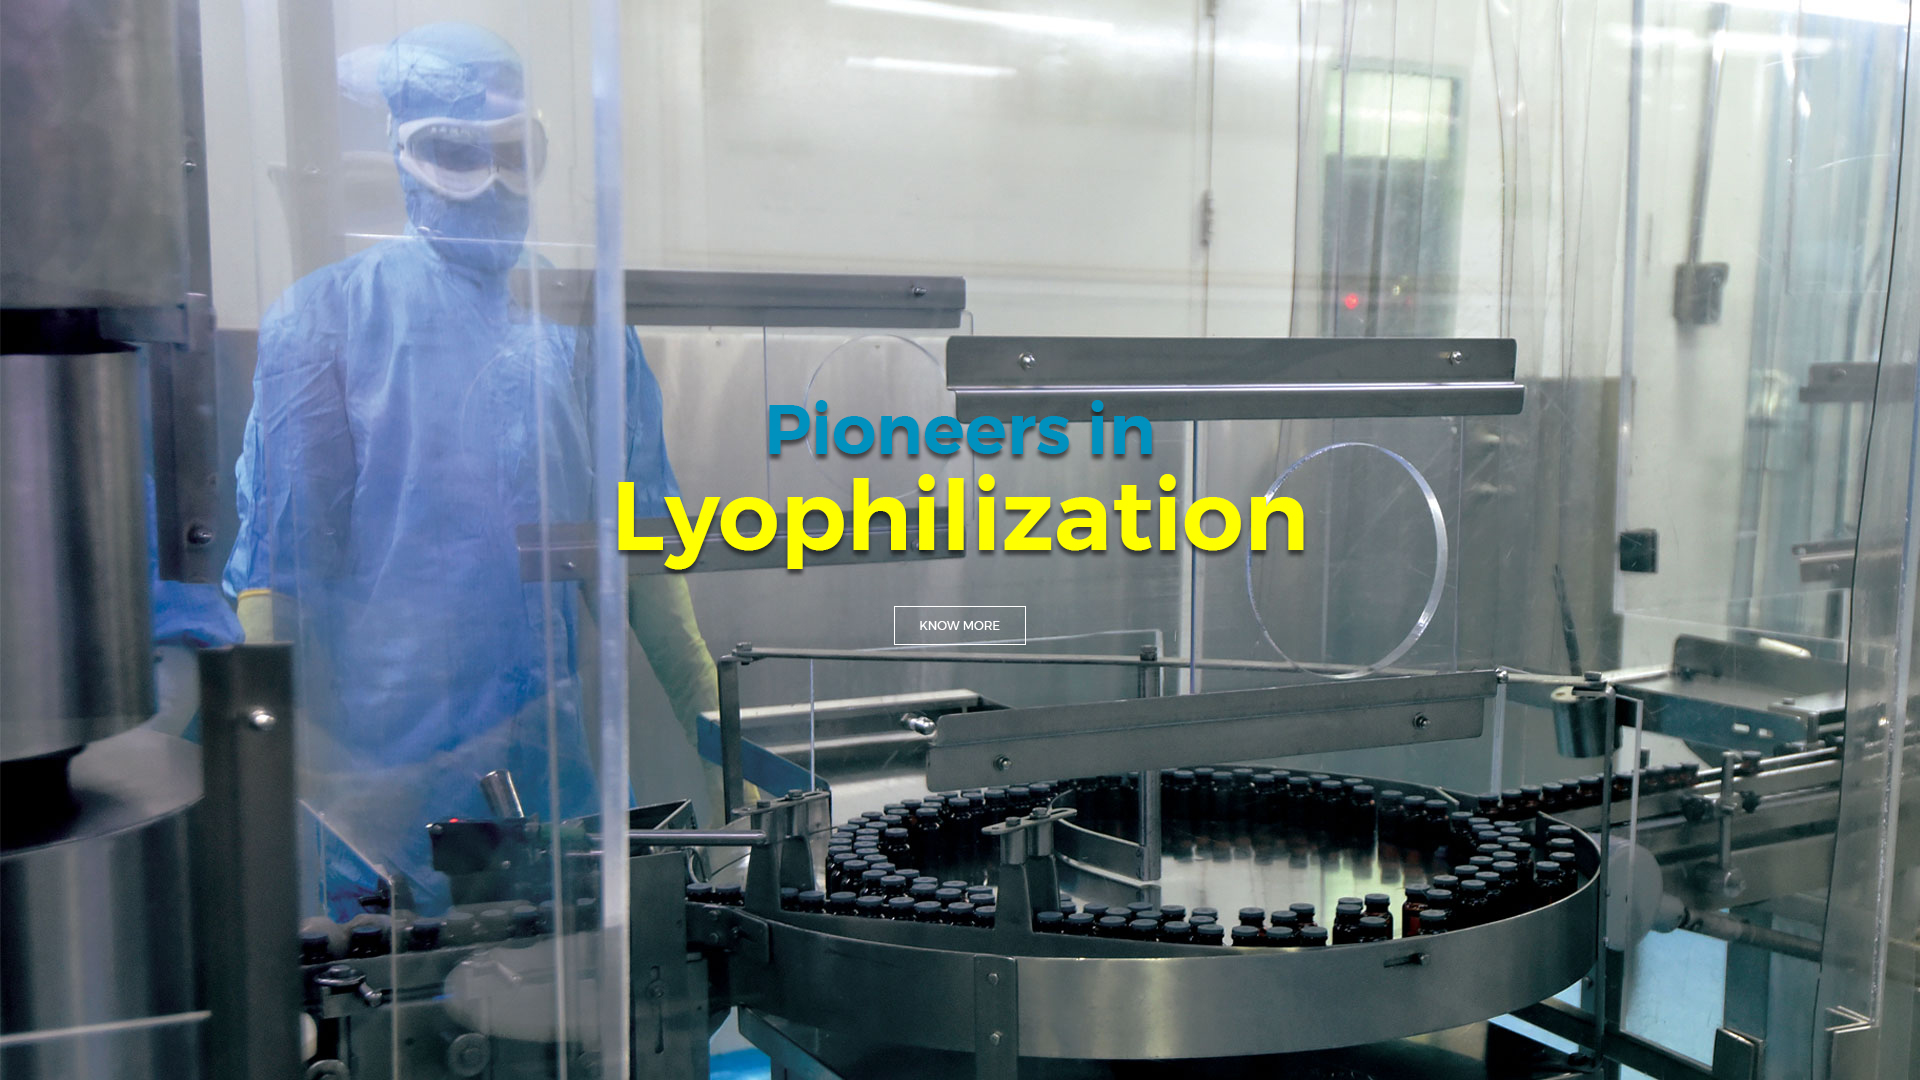 Pioneers in Lyophilization